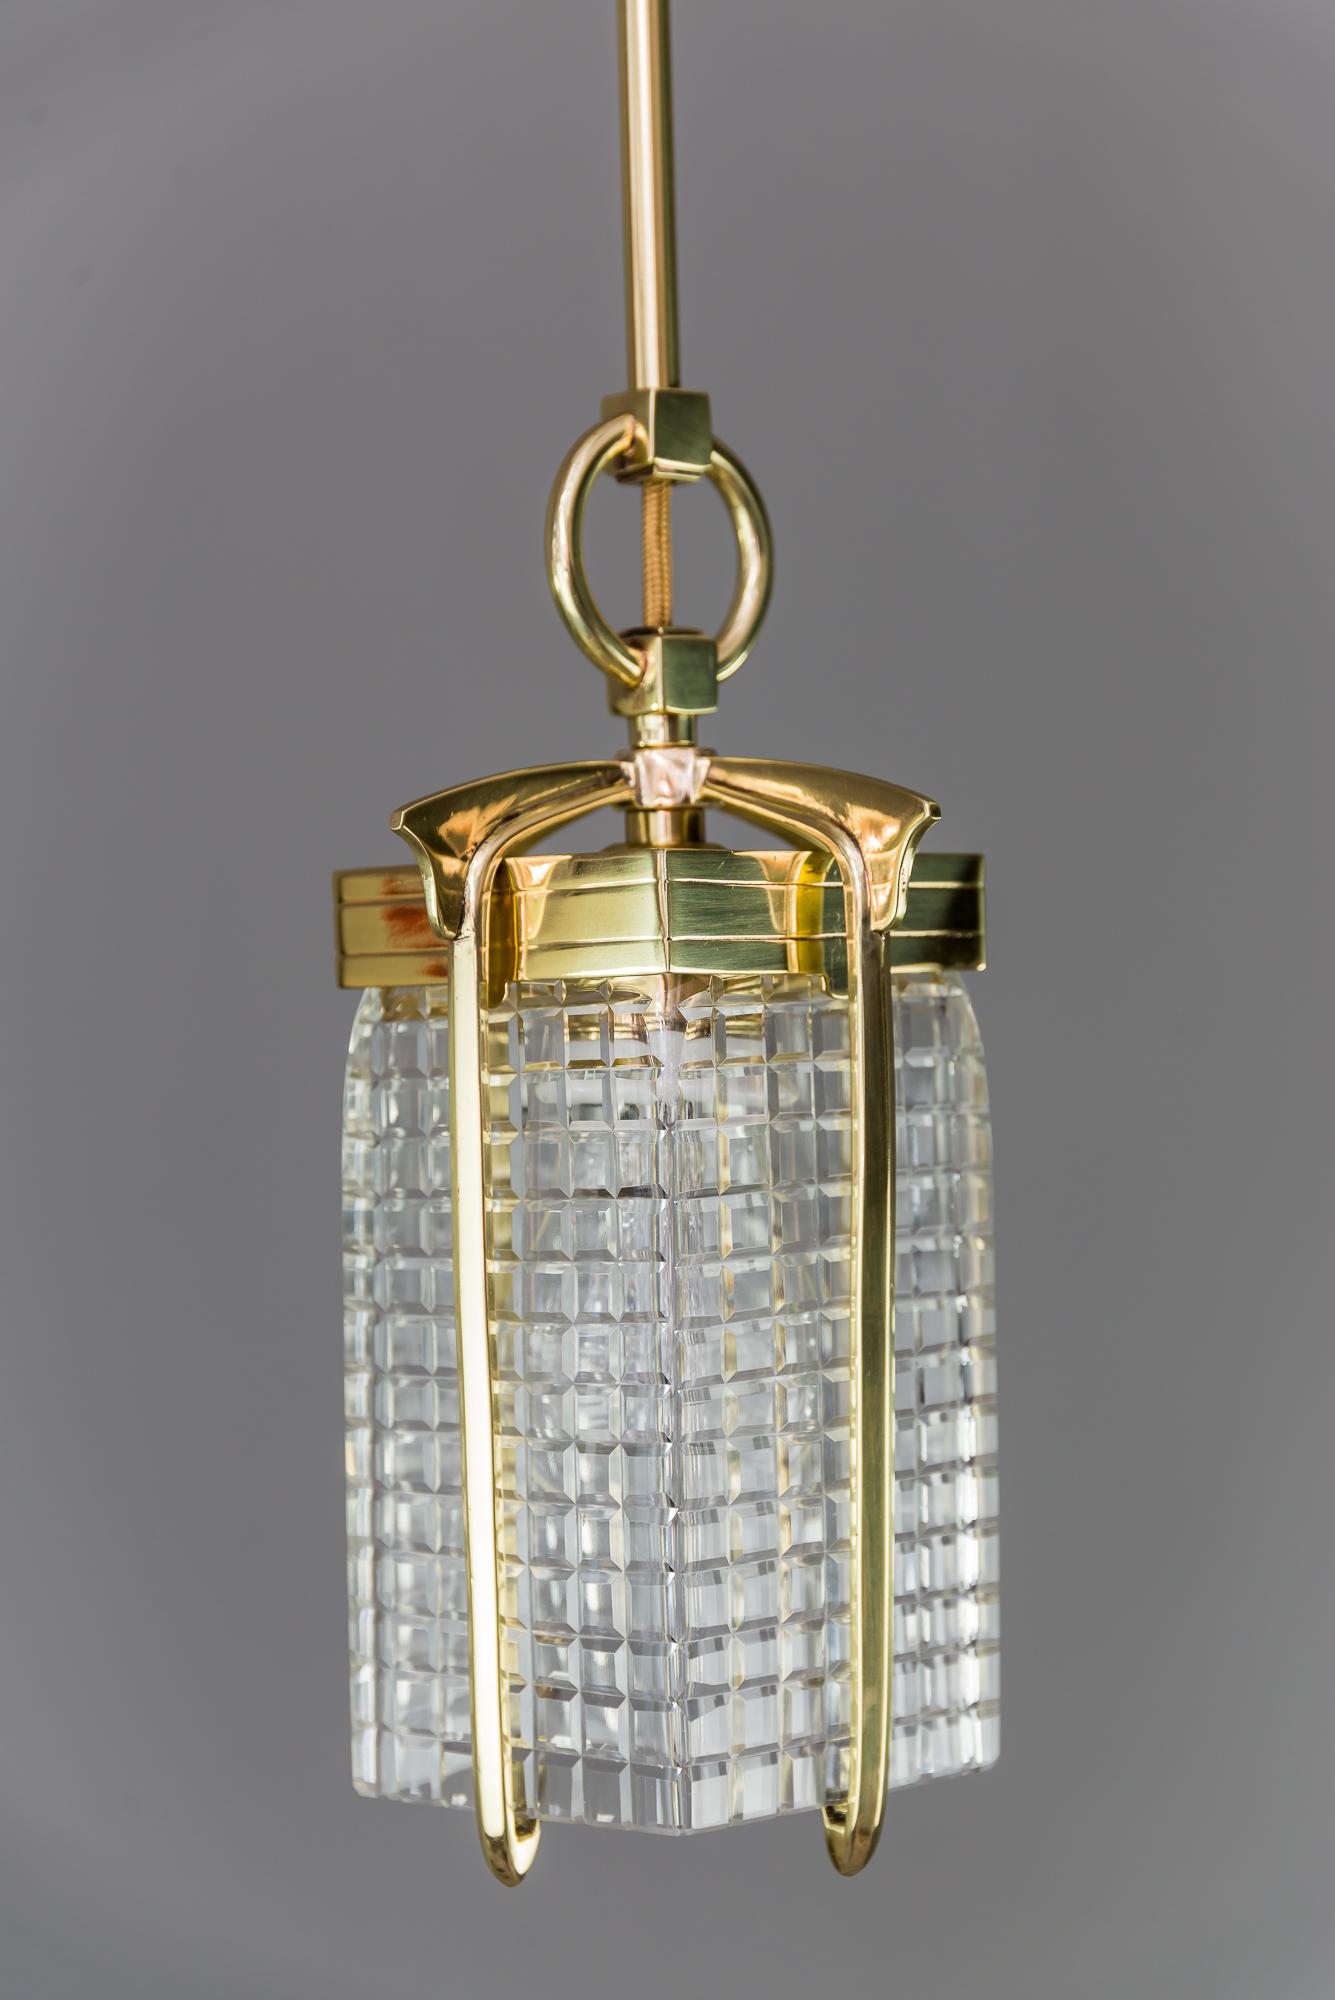 Art Deco pendant, vienna, 1920s.
Polished 
Stove enamelled.